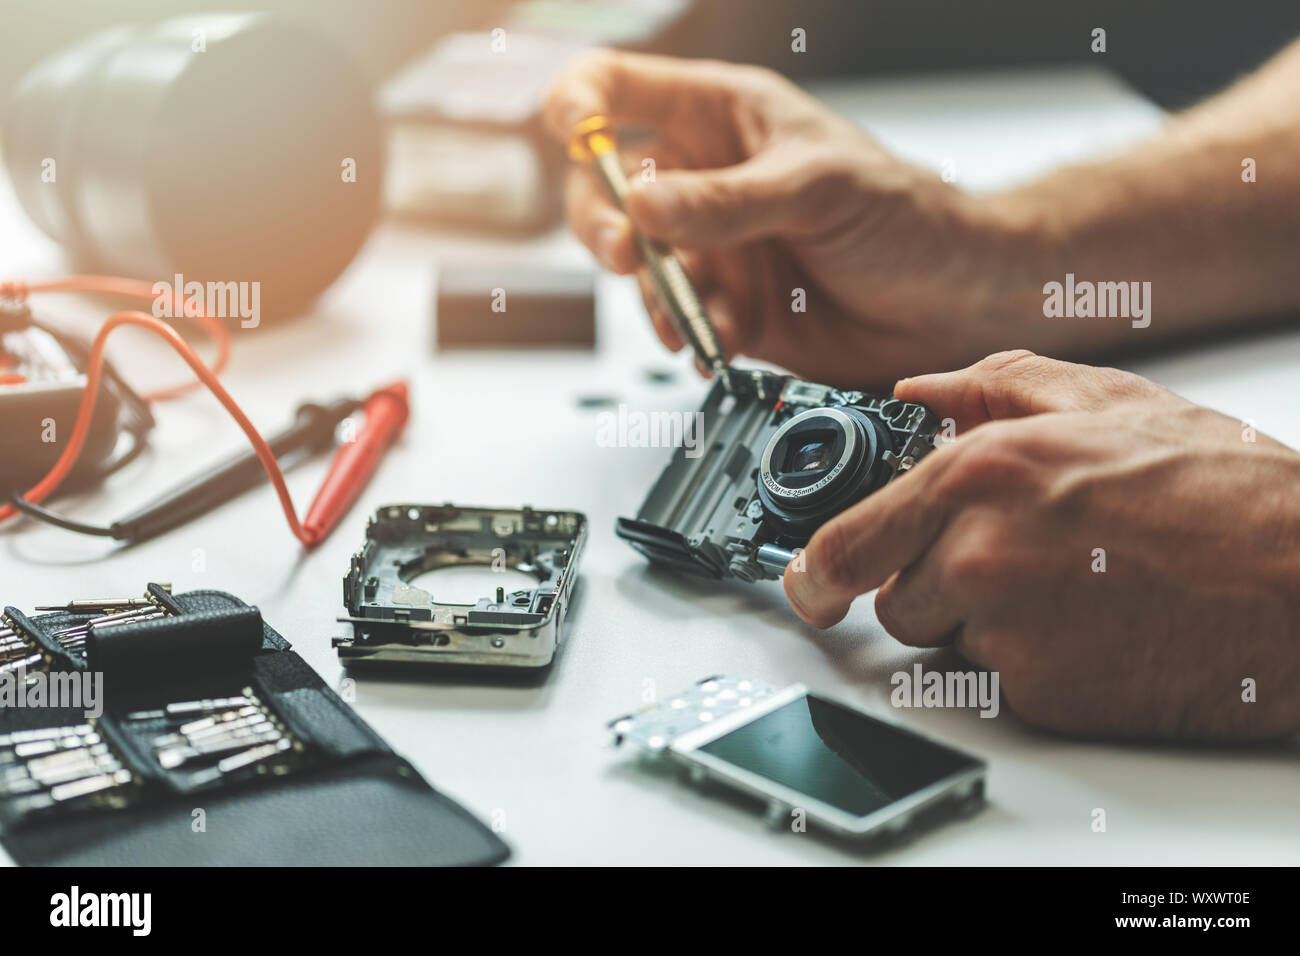 electronic repair service - technician repairing digital camera in office Stock Photo